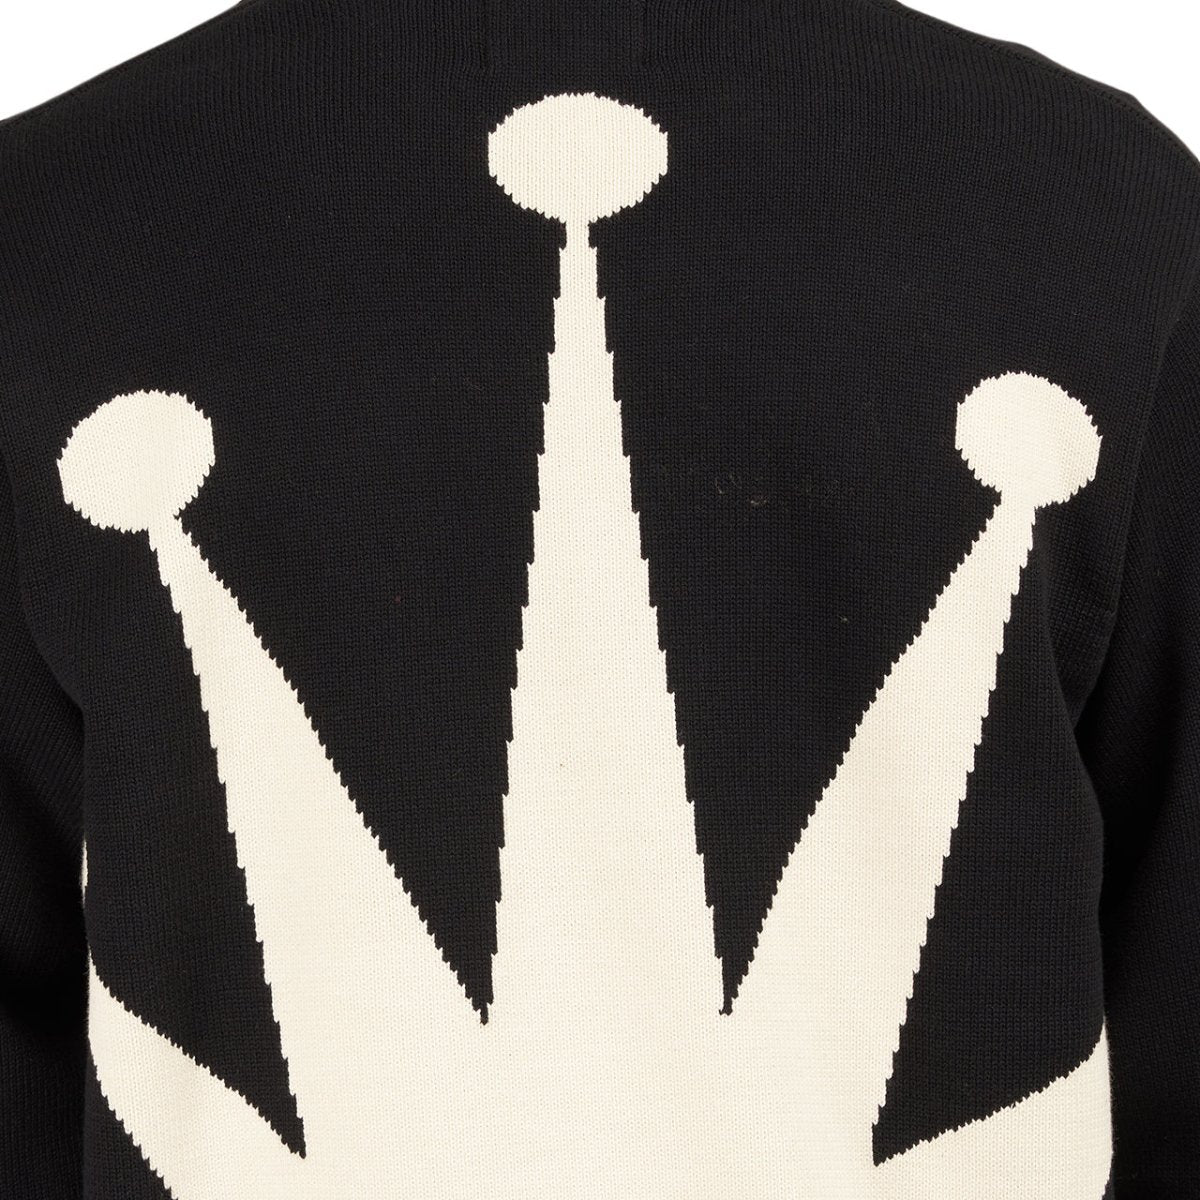 Stüssy Bent Crown Sweater (Schwarz)  - Allike Store